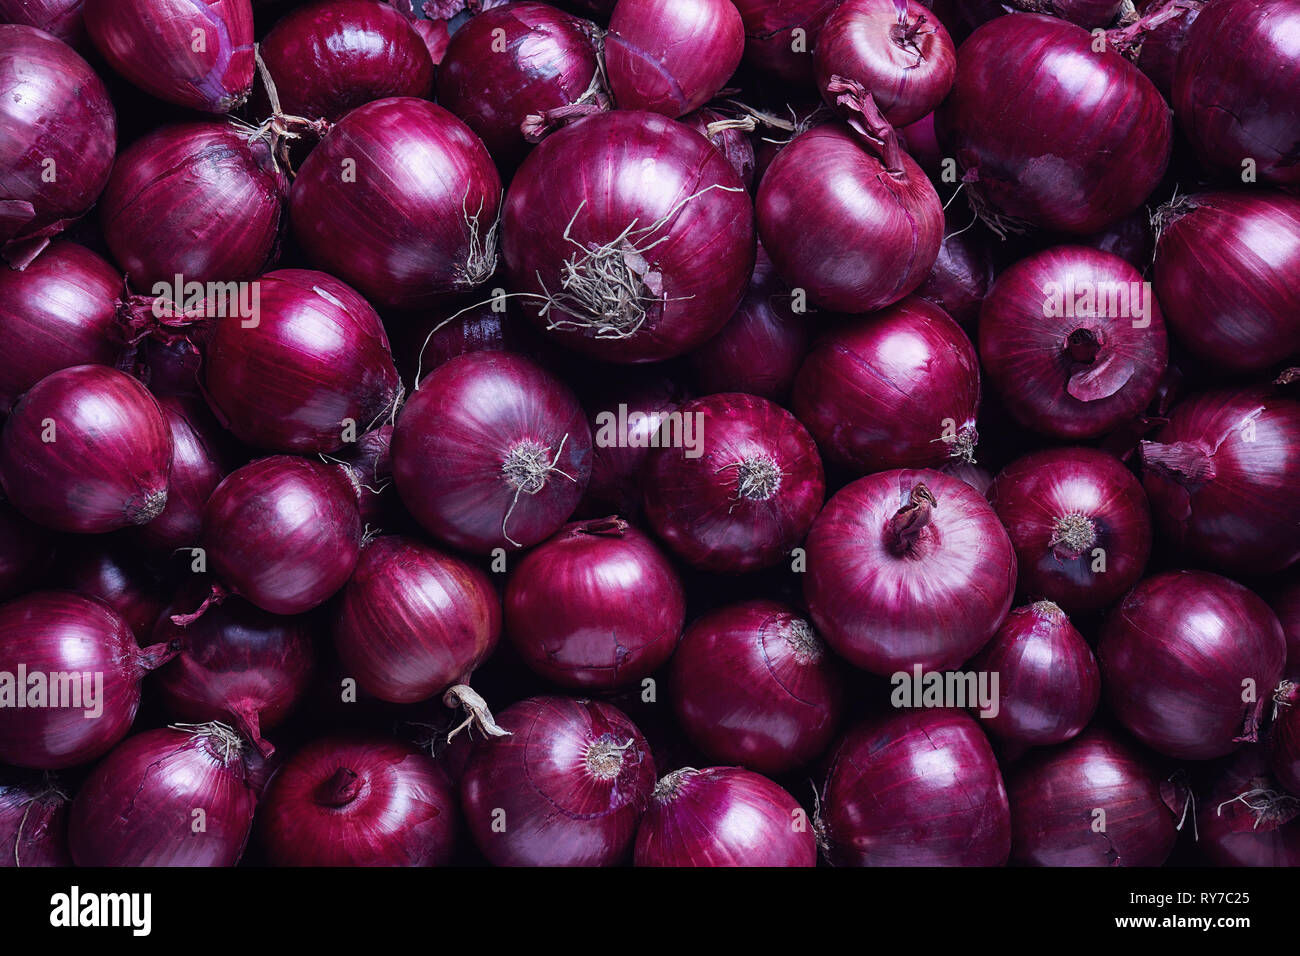 Full Frame Shot Of Purple Onions. Fresh purple onions as a background. Stock Photo